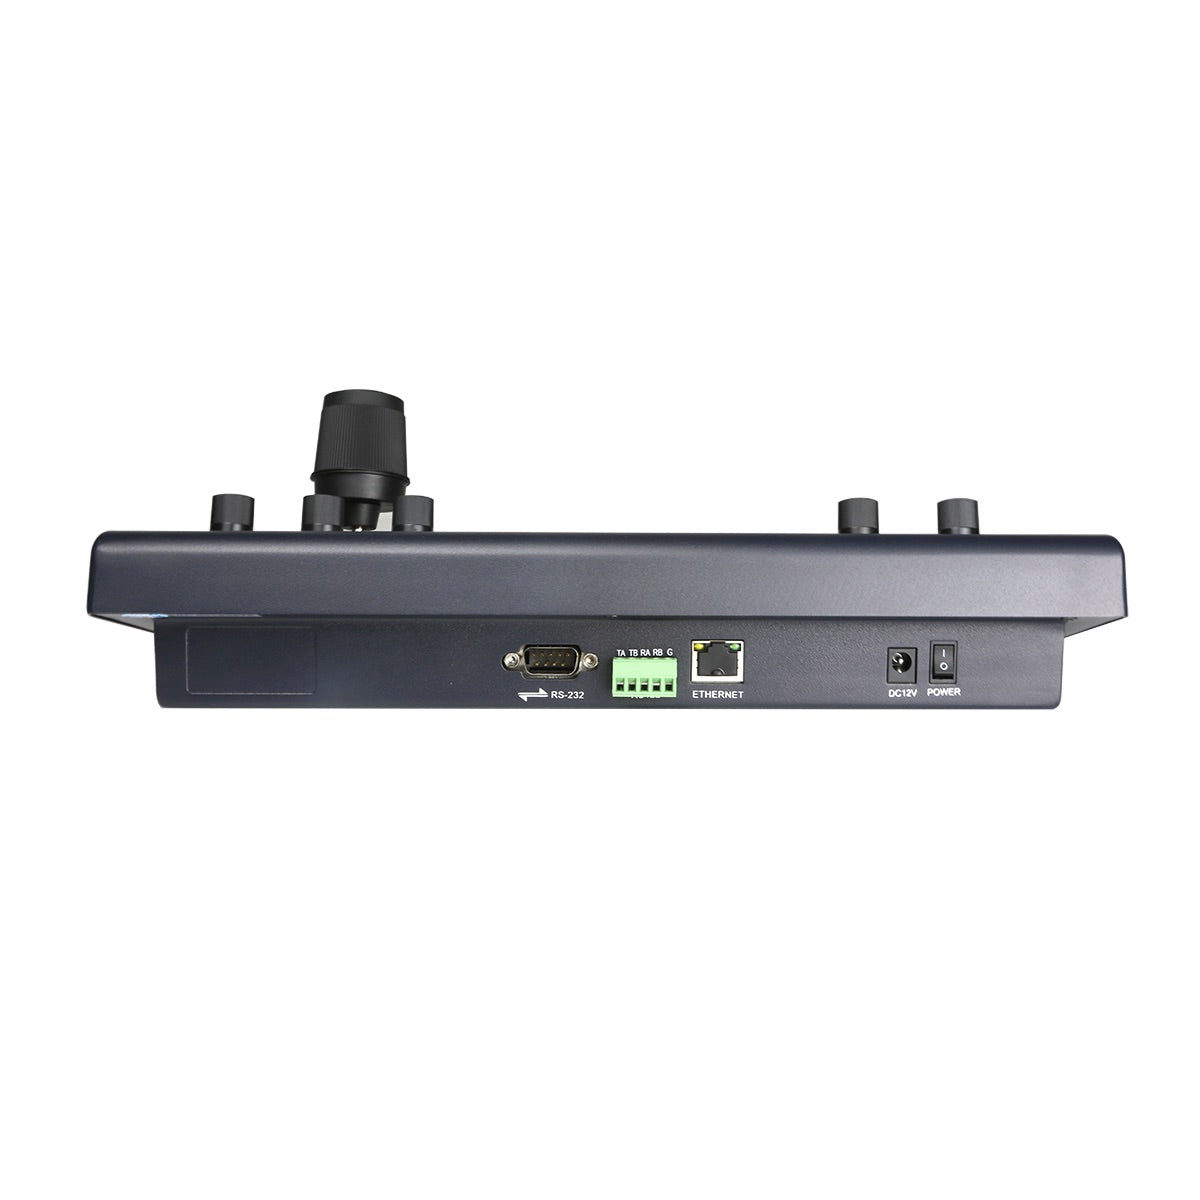 RGBlink PTZ Camera Controller with Joystick, rear